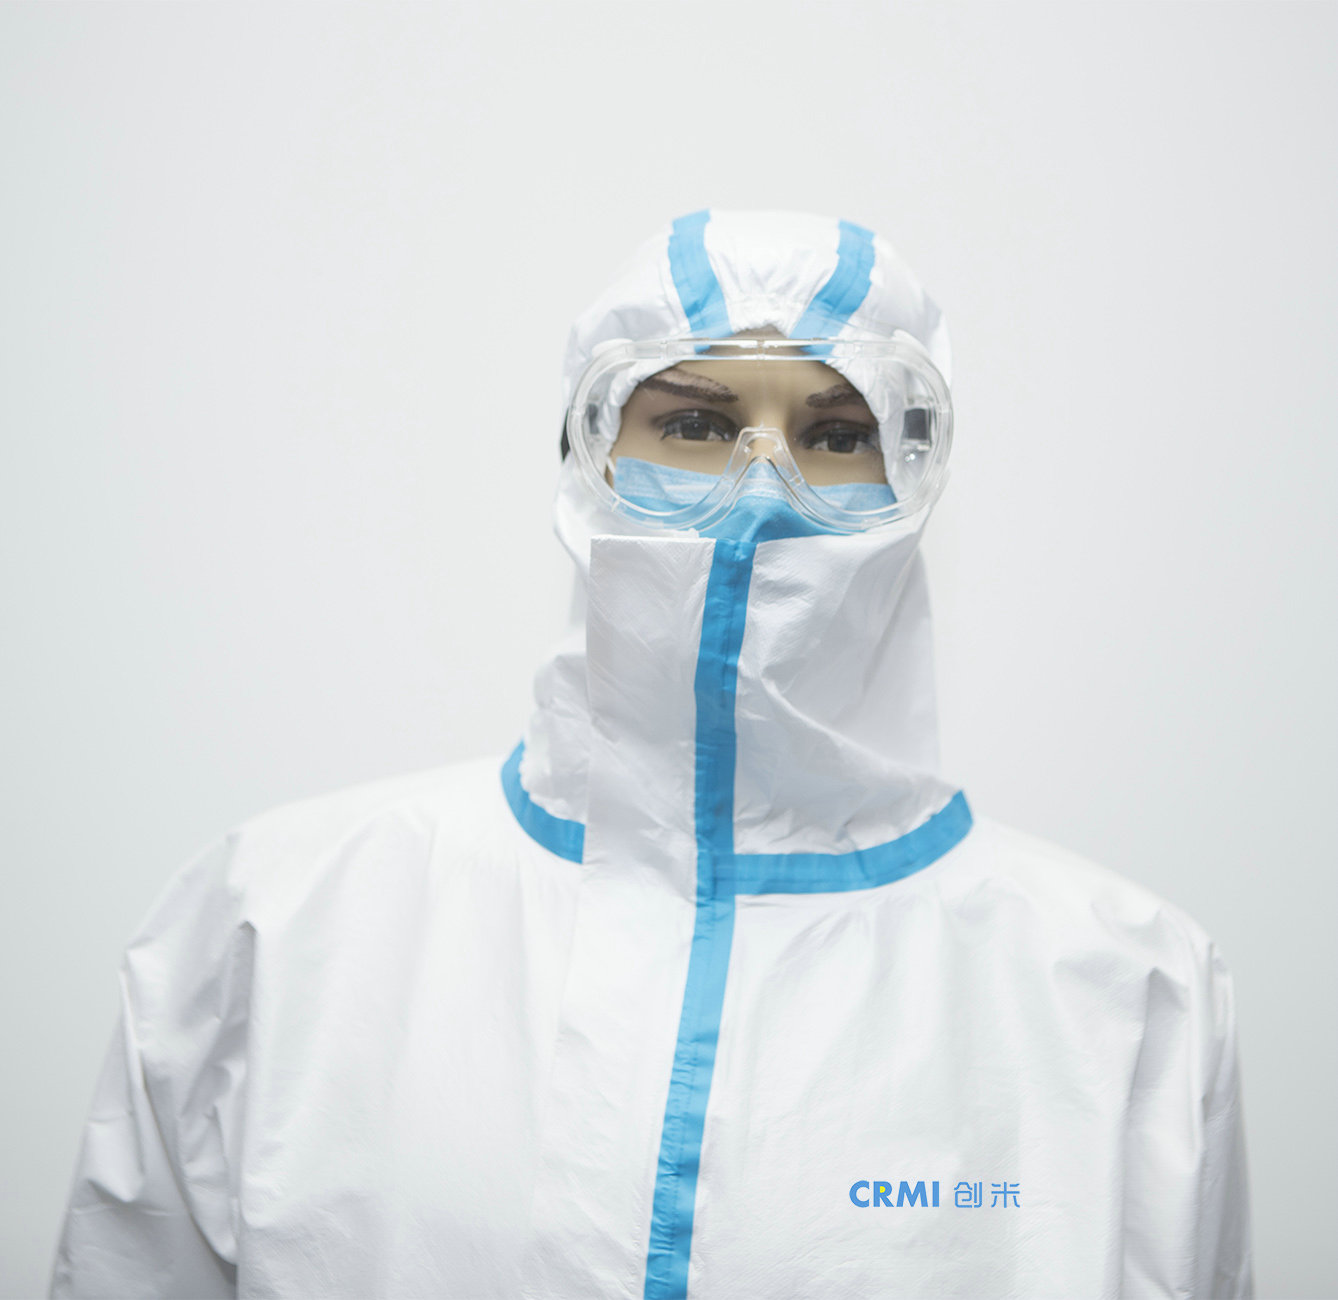 CRMI protective clothing